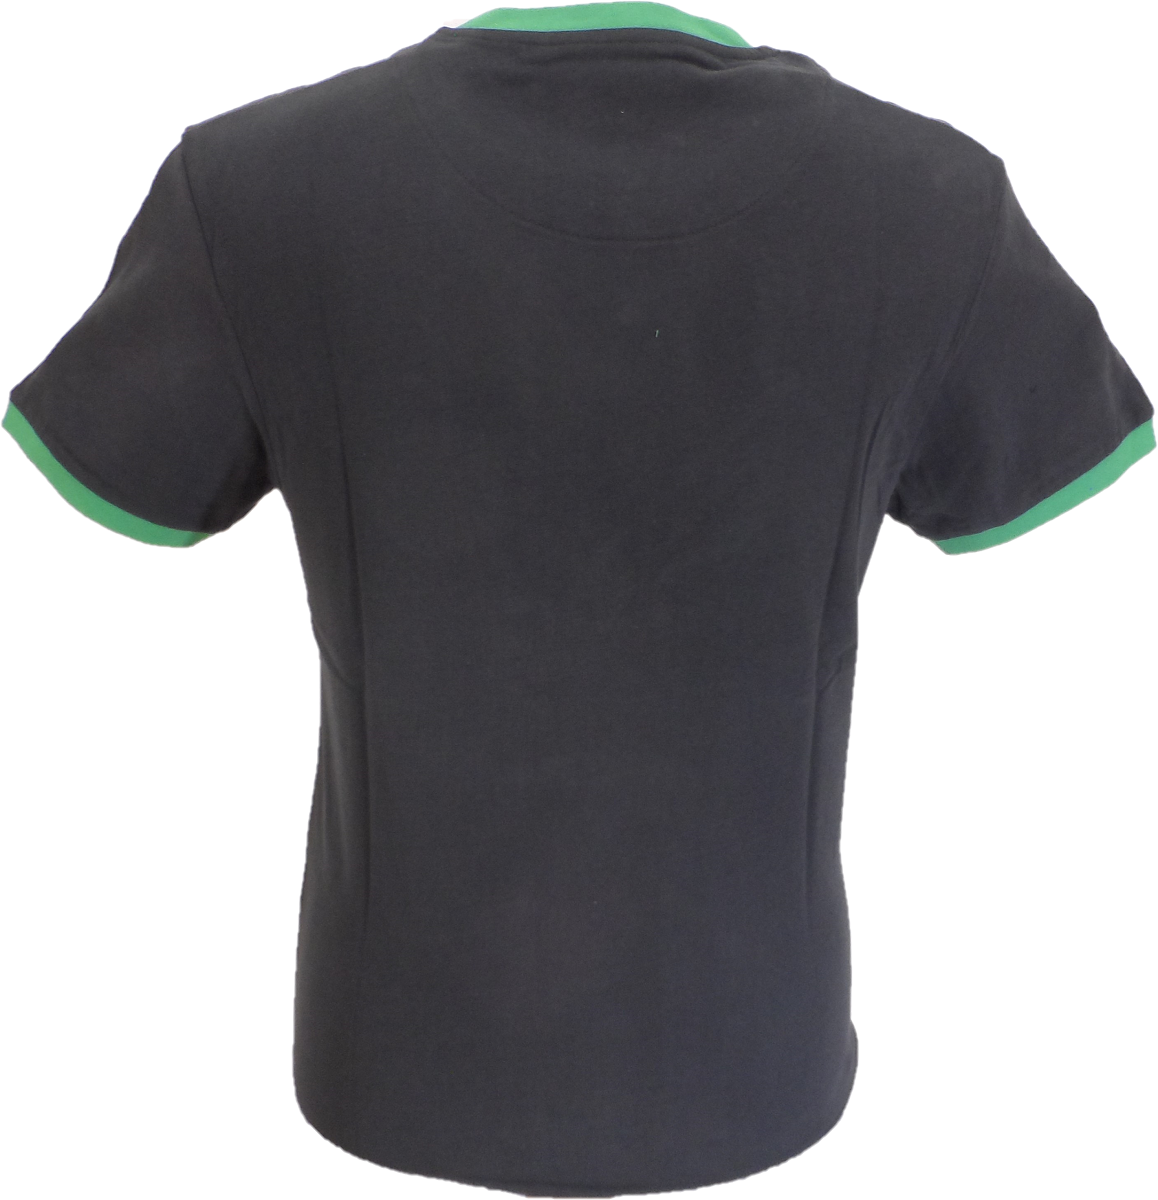 Trojan records camiseta casco clasico negro 100% algodon